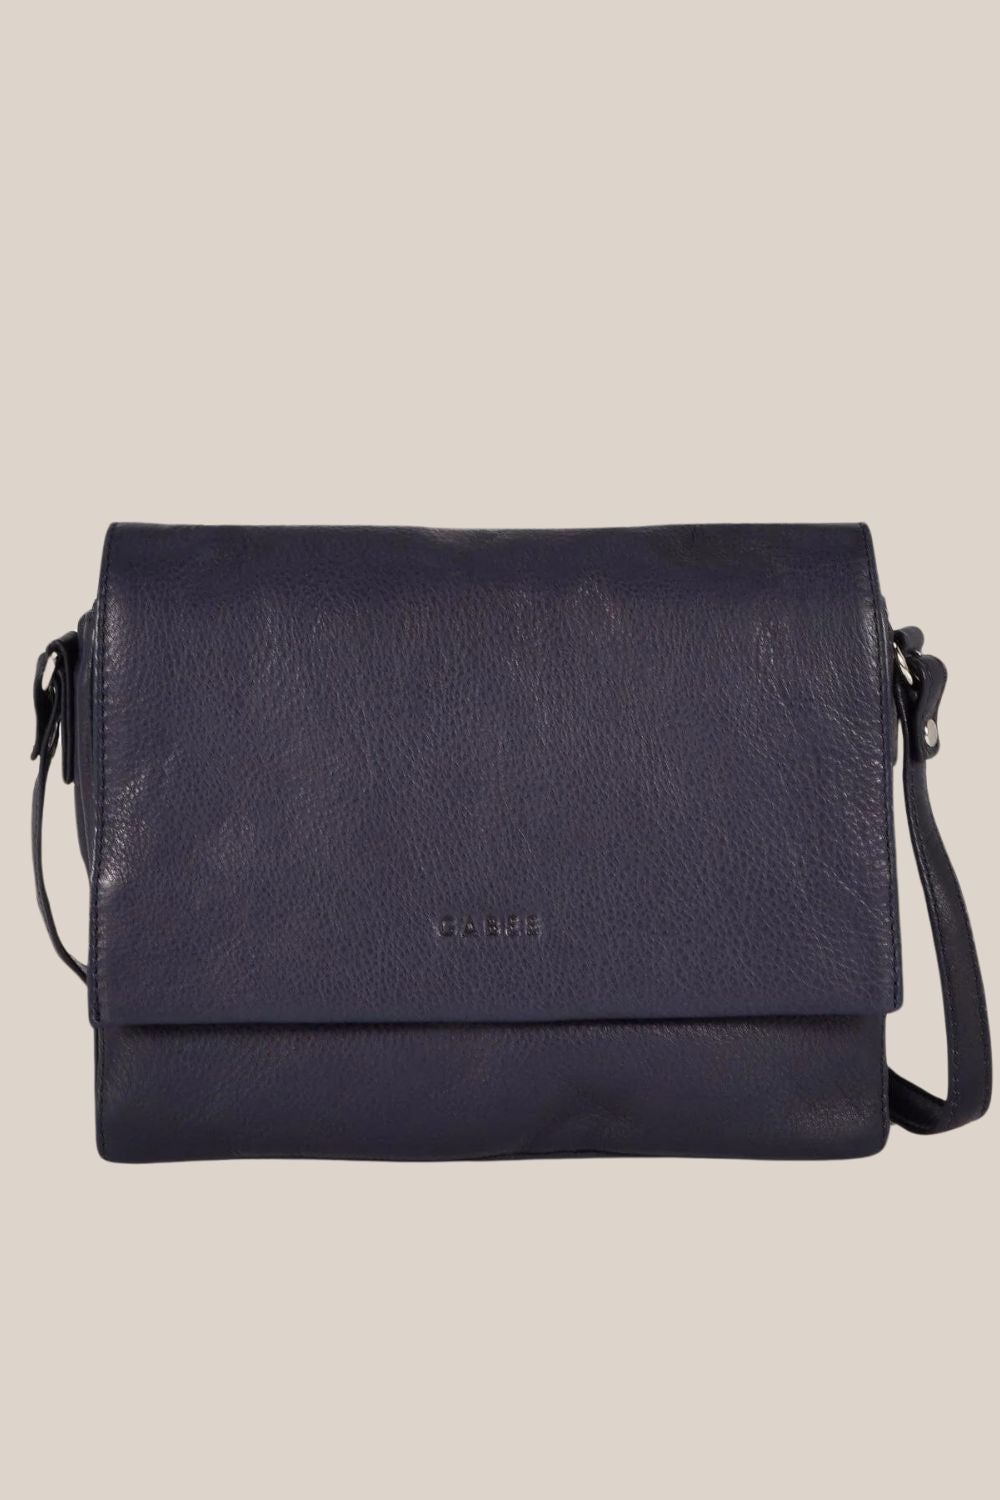 Gabee Eloise Soft Leather Flap Bag